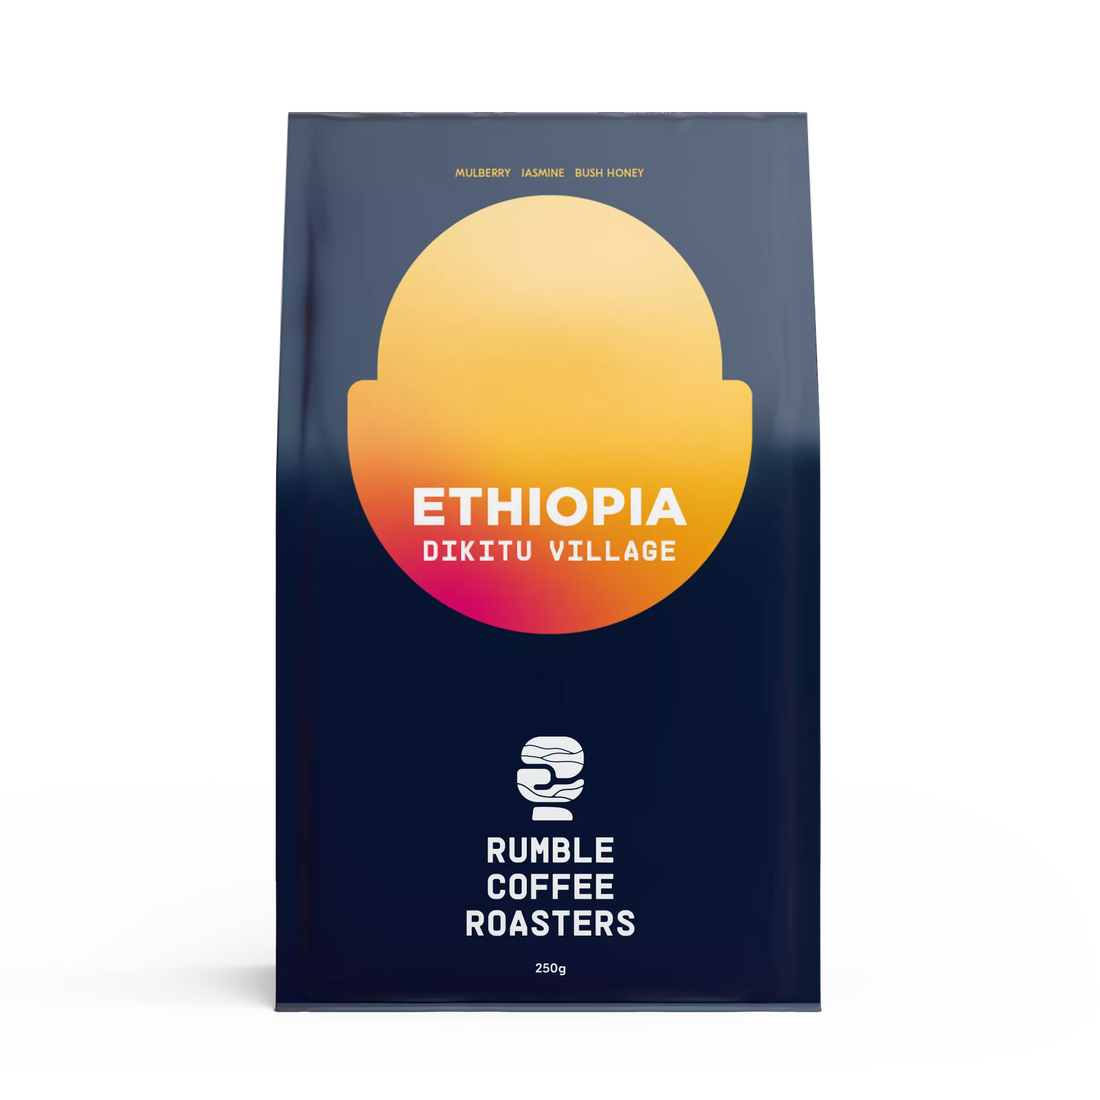 Ethiopia Dikitu Village Natural Espresso - Rumble Coffee